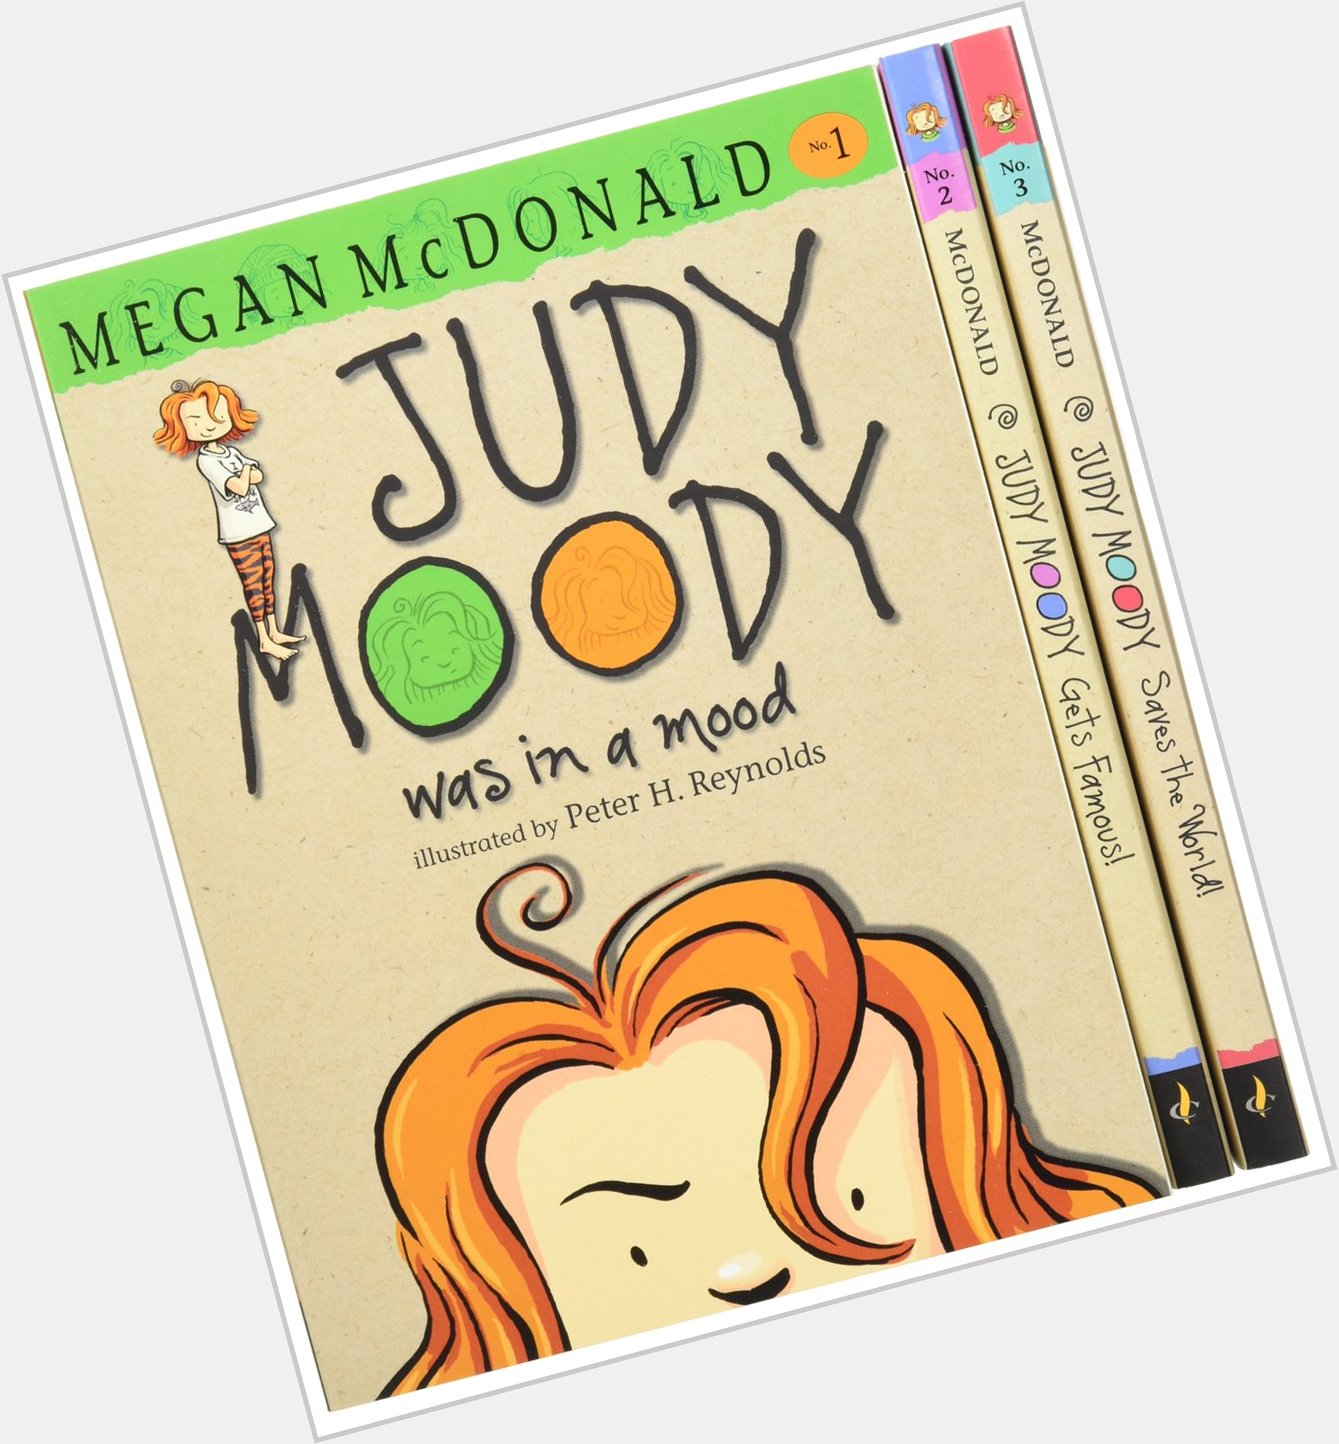 February 28, 1959: Happy birthday author Megan McDonald 